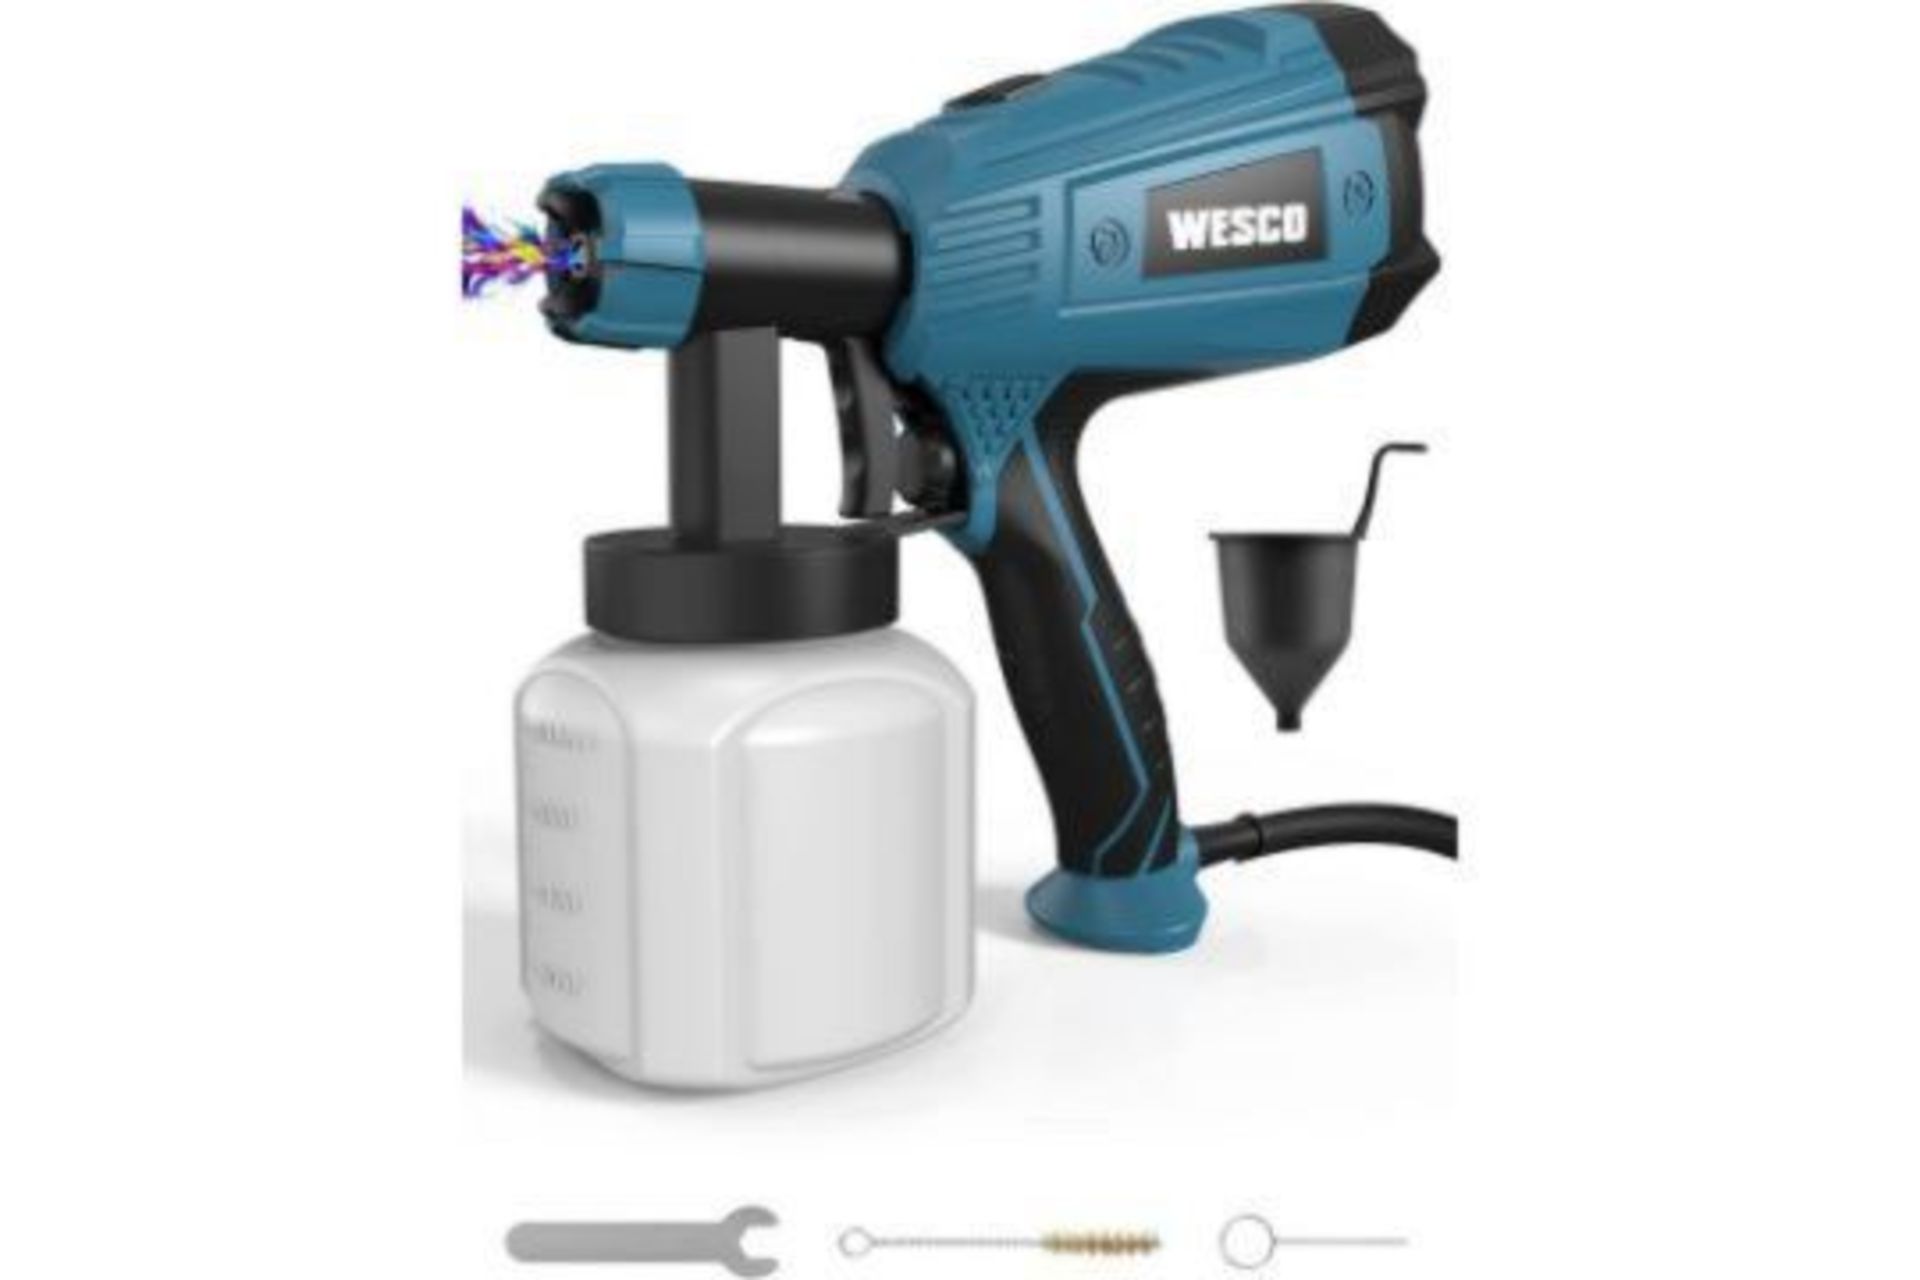 NEW BOXED WESCO Paint Sprayer, WESCO 500W DIY Electric Spray Gun with 3 Spray Patterns, 3 Nozzle